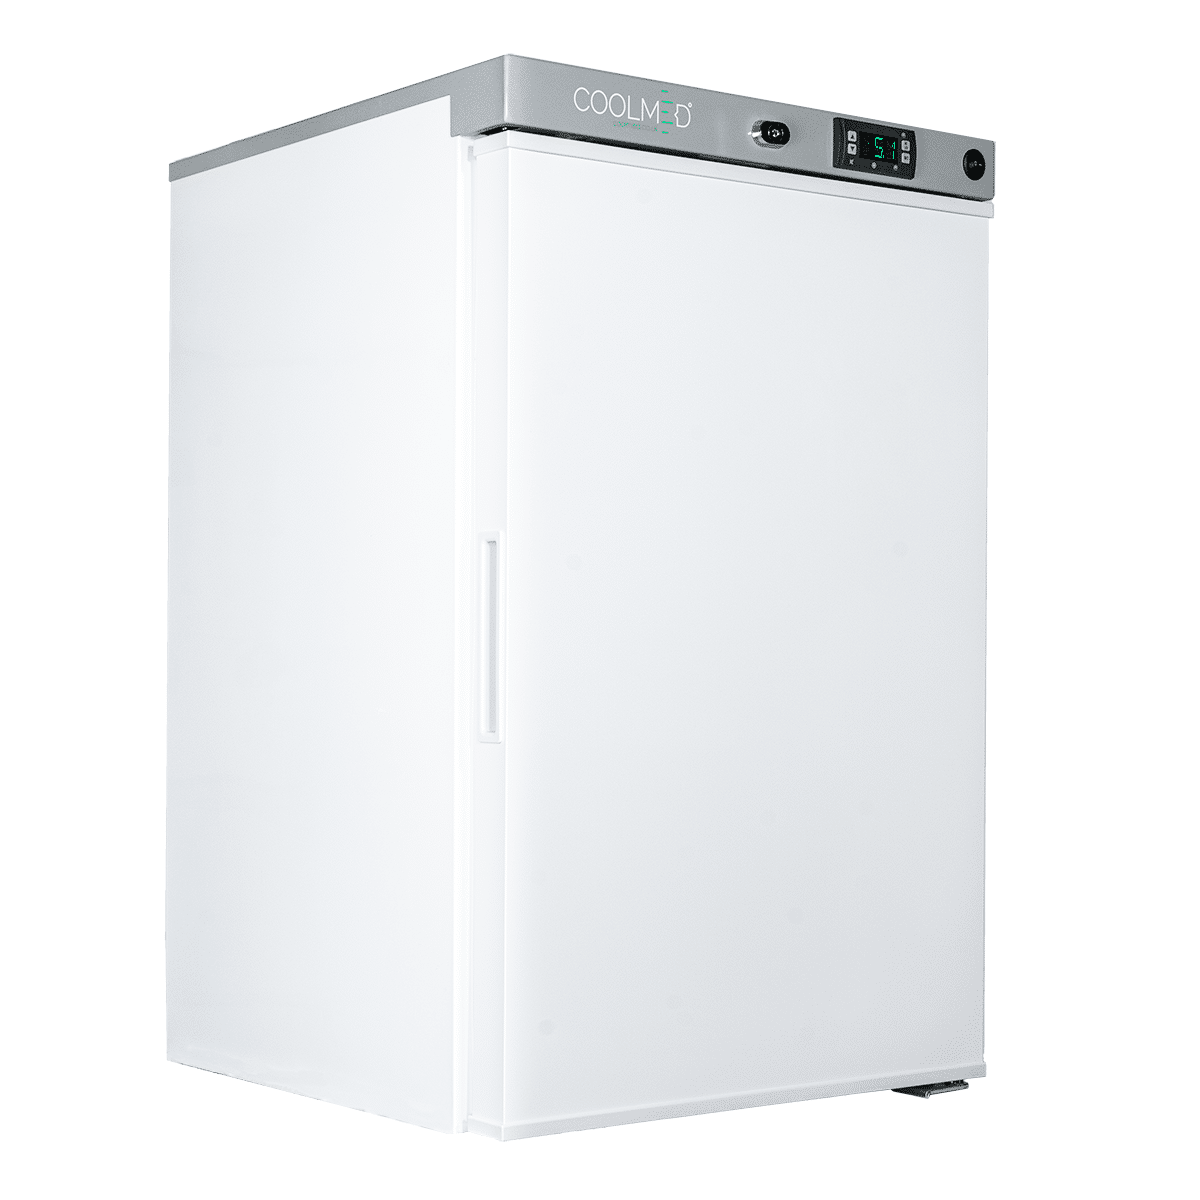 Solid Door Small Neonatal Refrigerator | CMN59 | CoolMed